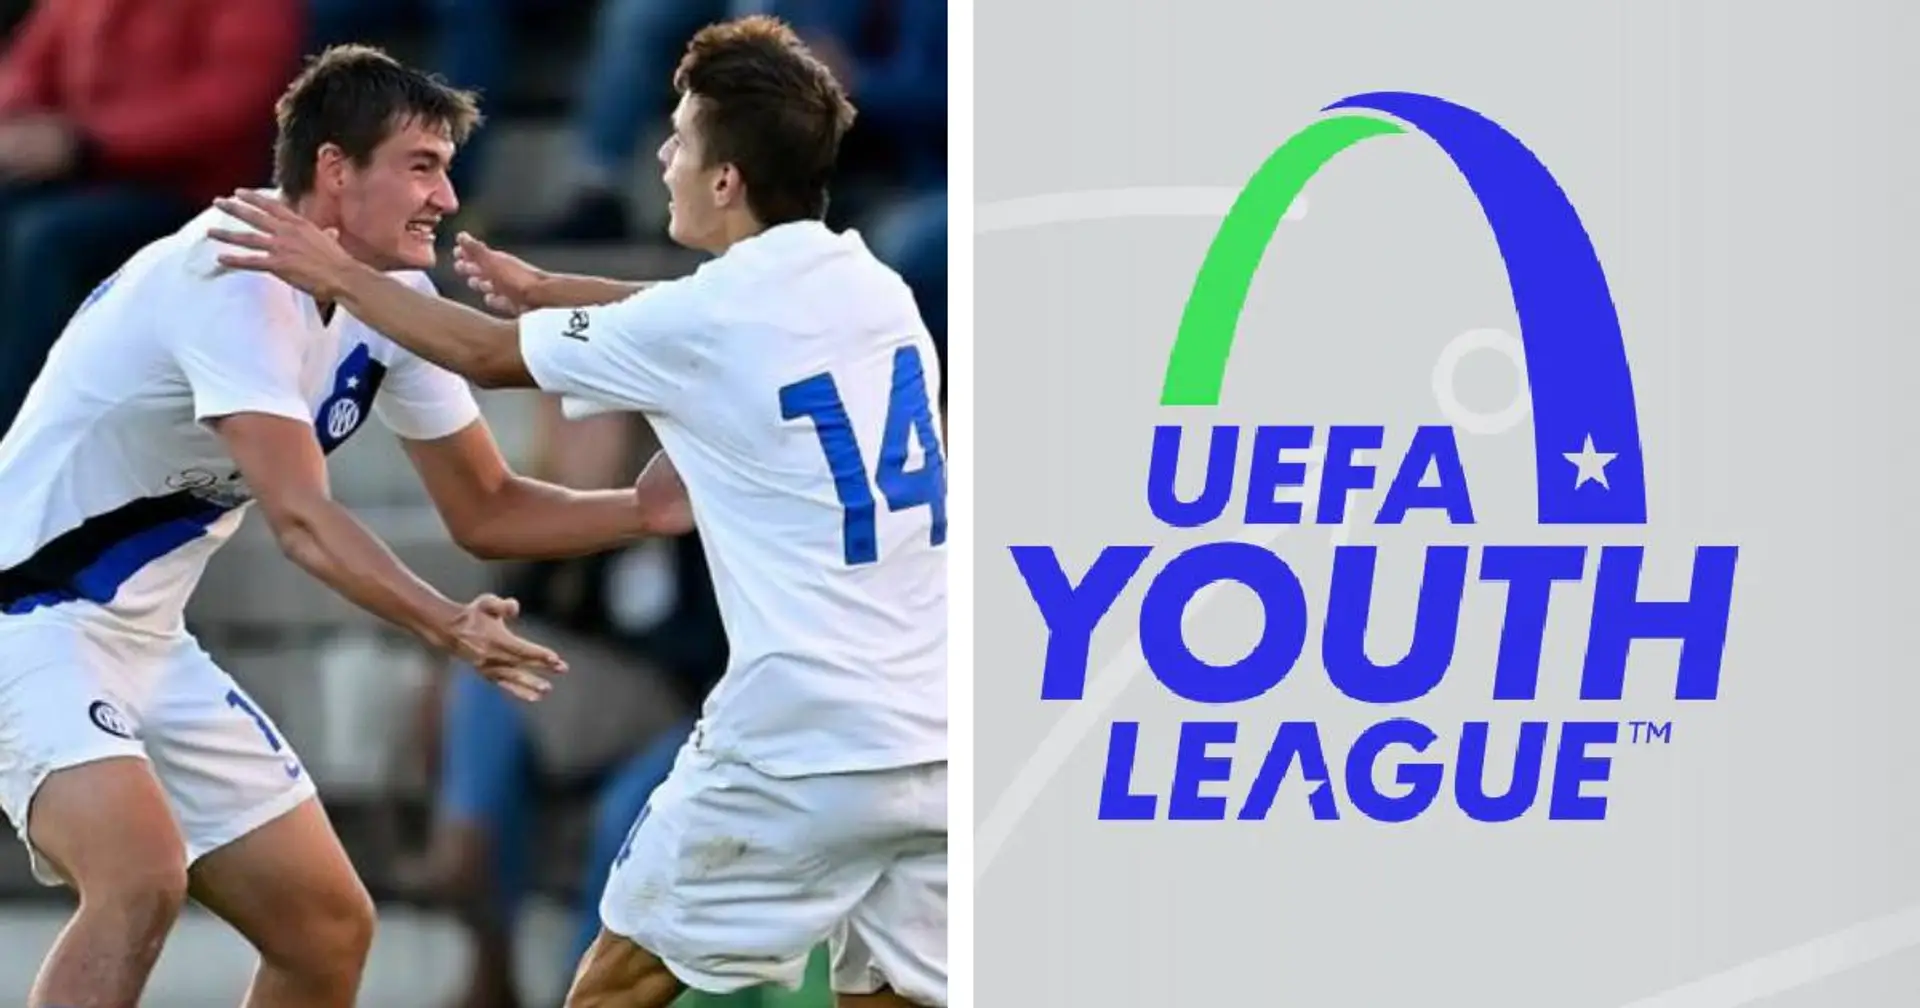 Non basta il super gol di Berenbruch, l'Inter di Chivu fatica in Youth League: la qualificazione ora è difficile 